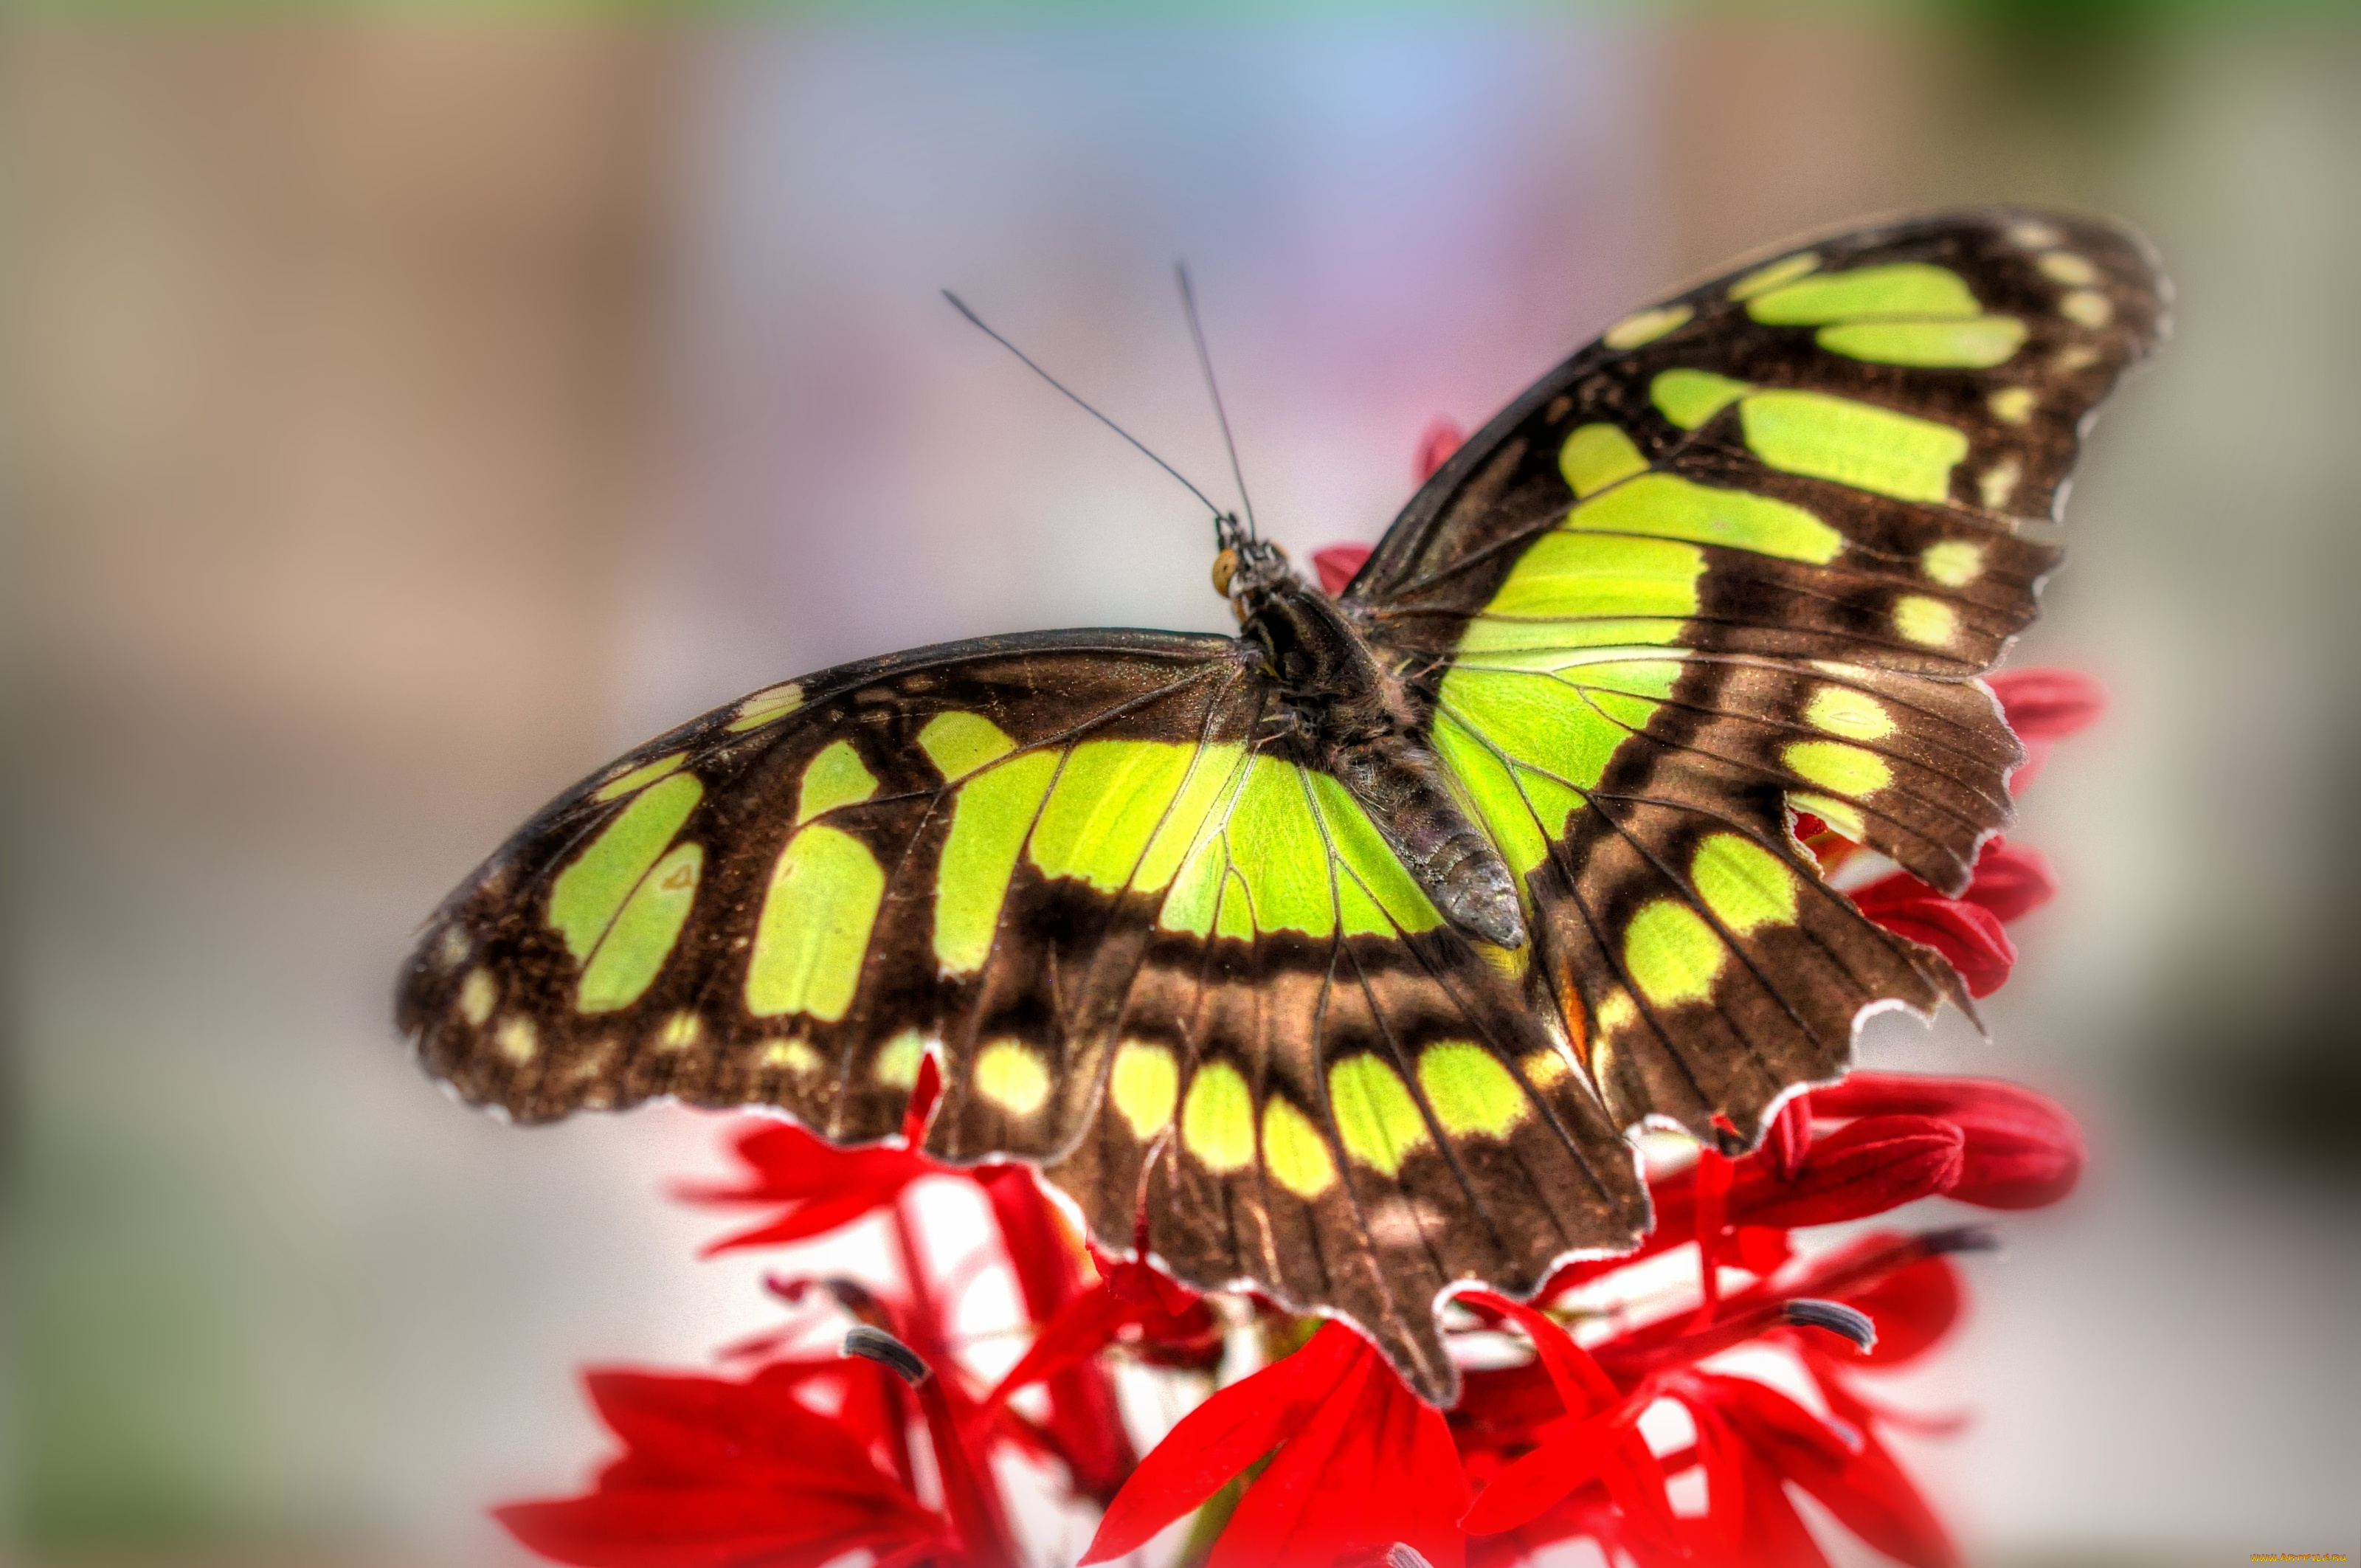 Бабочка с яркими крыльями. Бабочки. Красивые бабочки. Яркие бабочки. Расцветки бабочек.